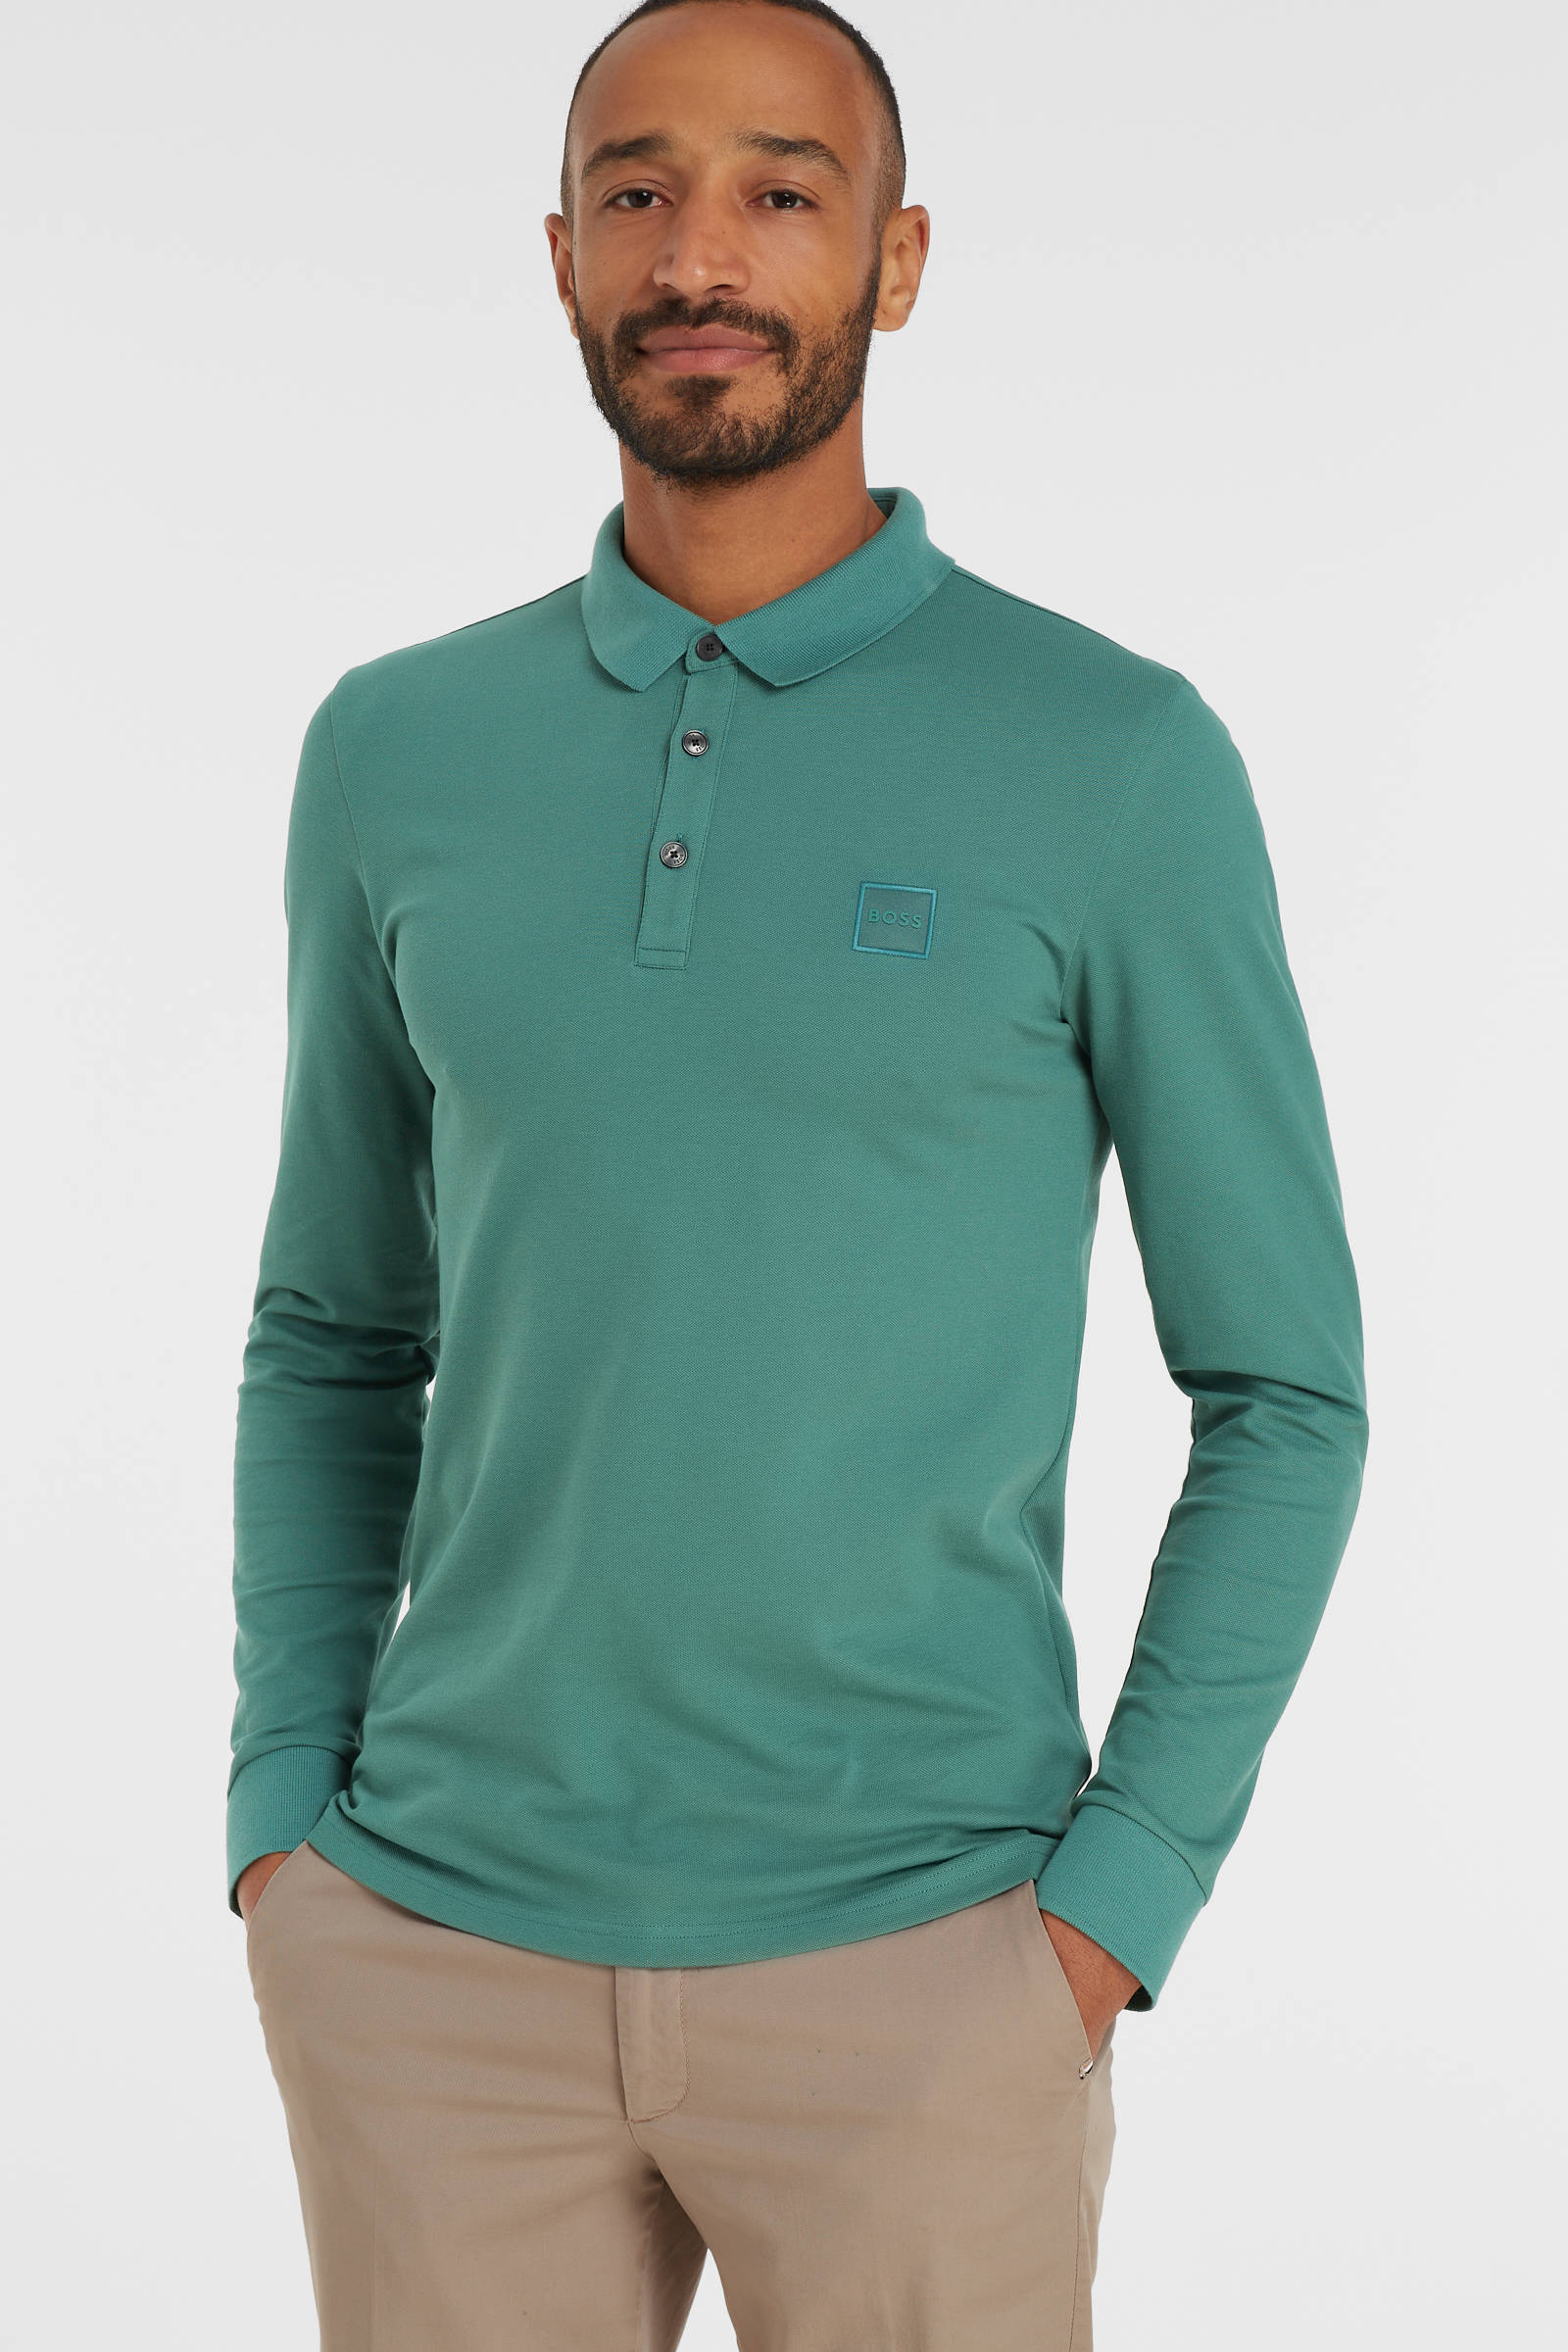 Casual polo Prime light/pastel green wehkamp Heren Kleding Tops & Shirts Shirts Poloshirts 